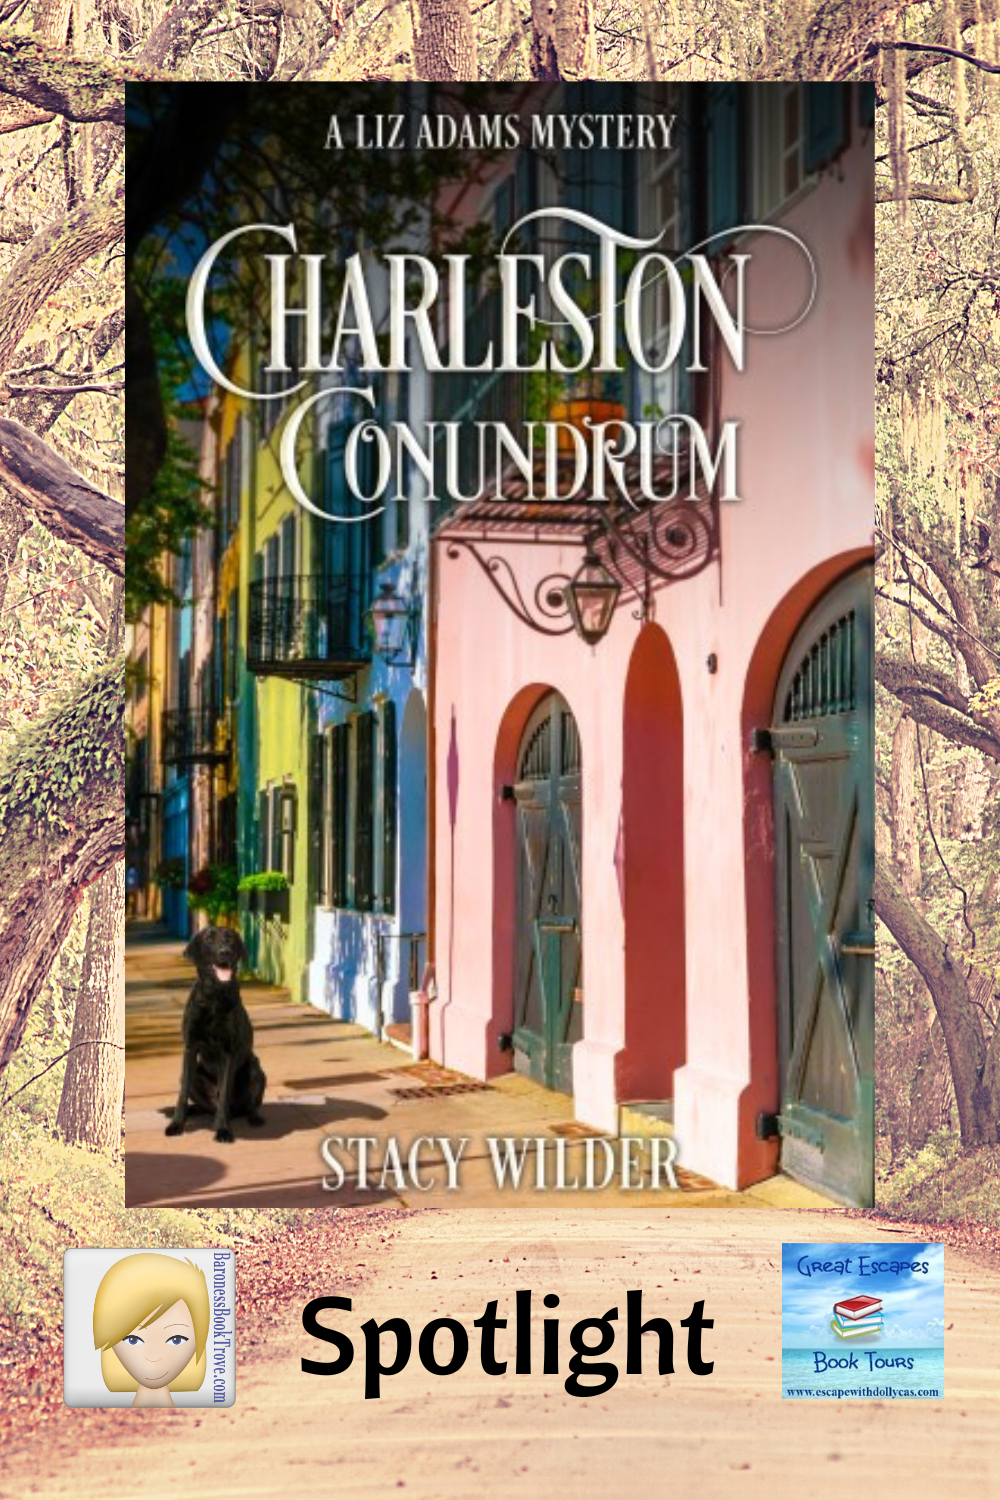 Charleston Conundrum SL